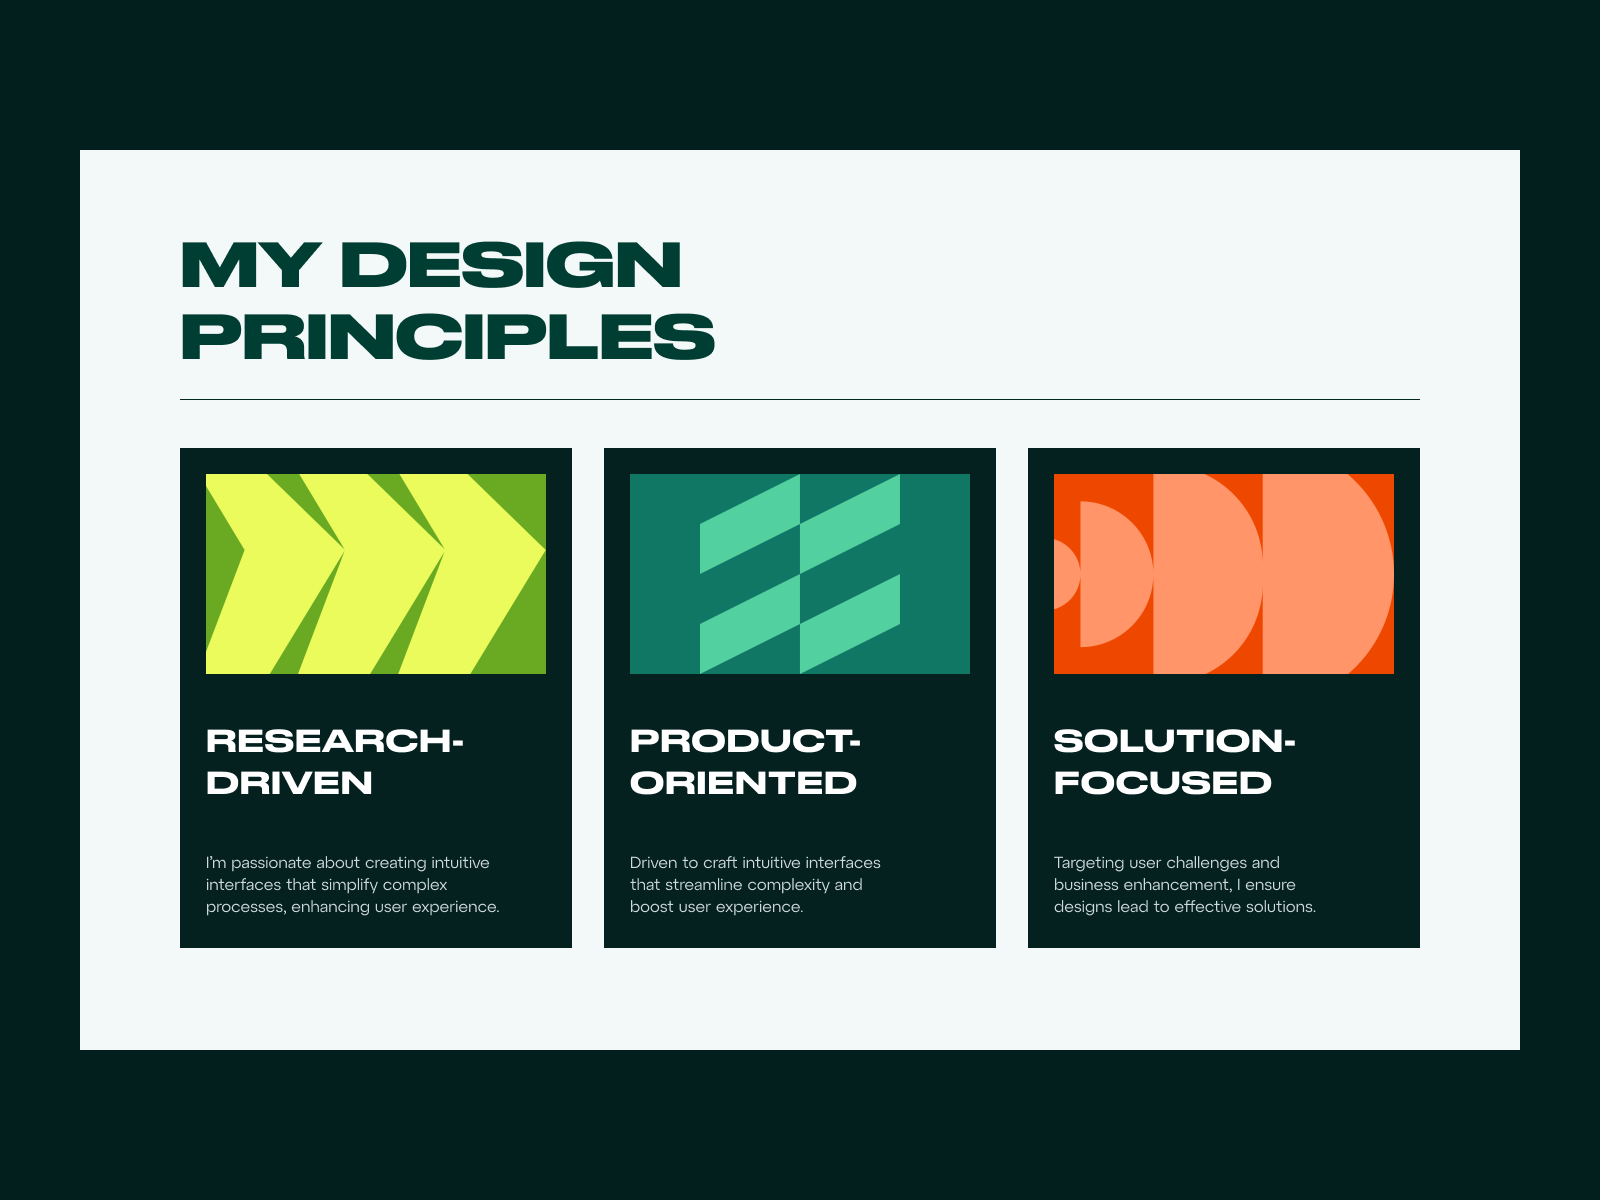 My design principles